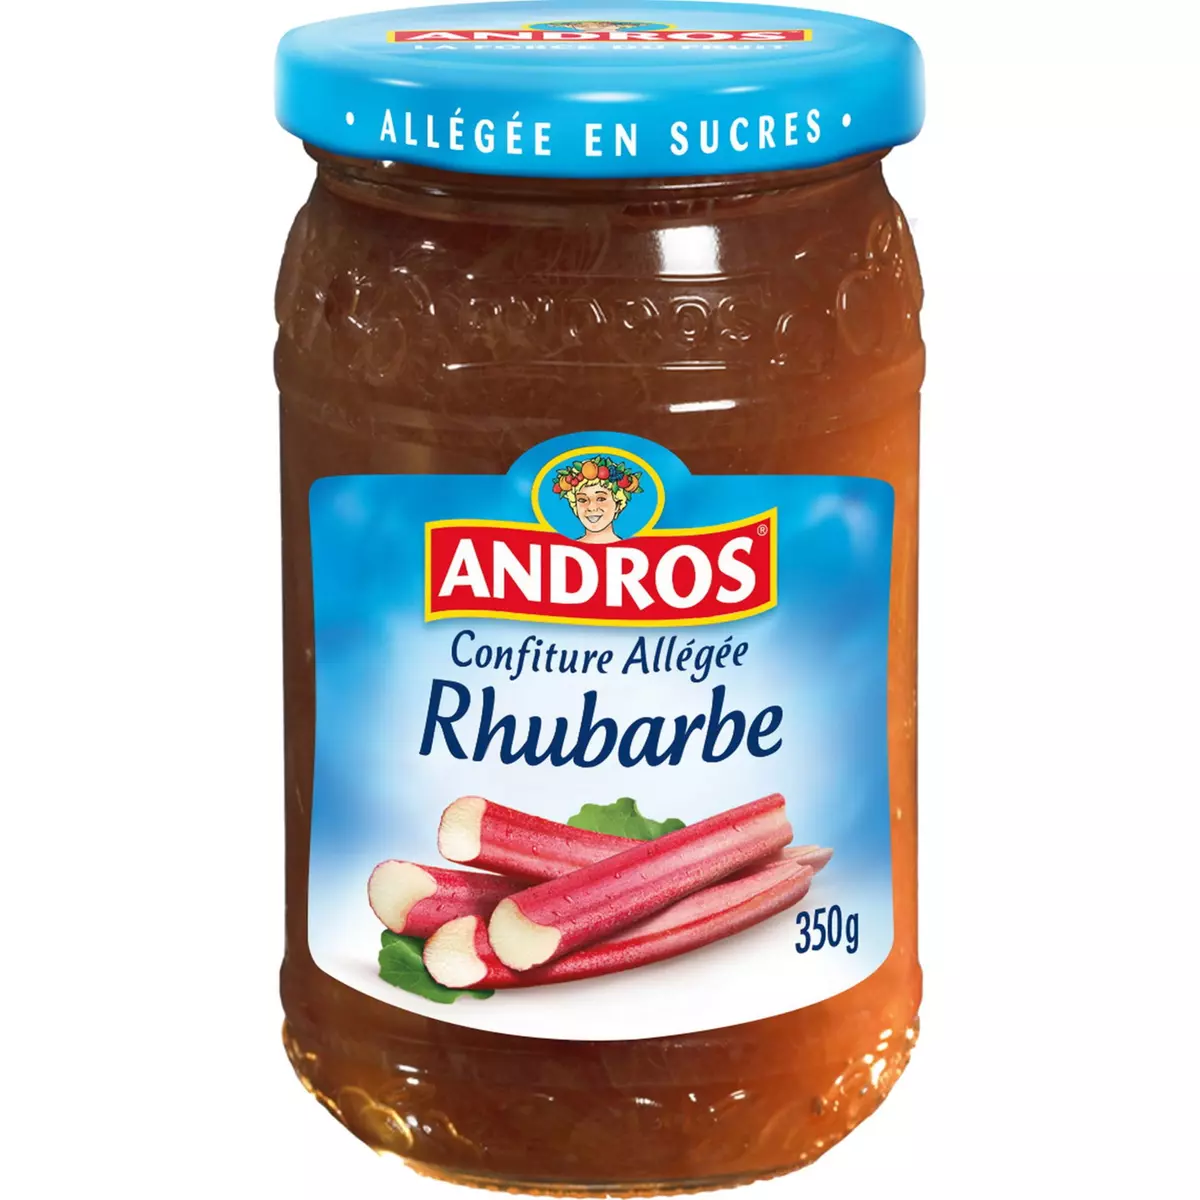 ANDROS Confiture allégée rhubarbe 350g